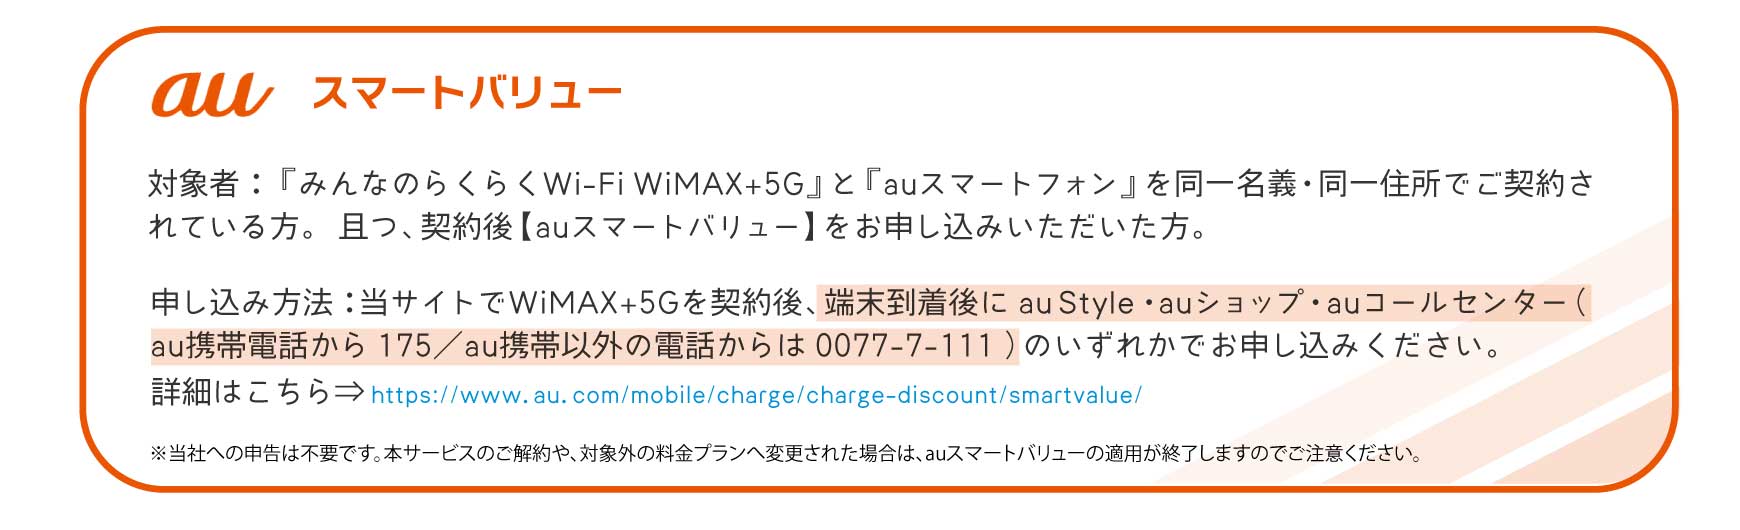 WiMAX+5G wimax 5g キャンペーン ワイマックス みんなのらくらくWi-Fi